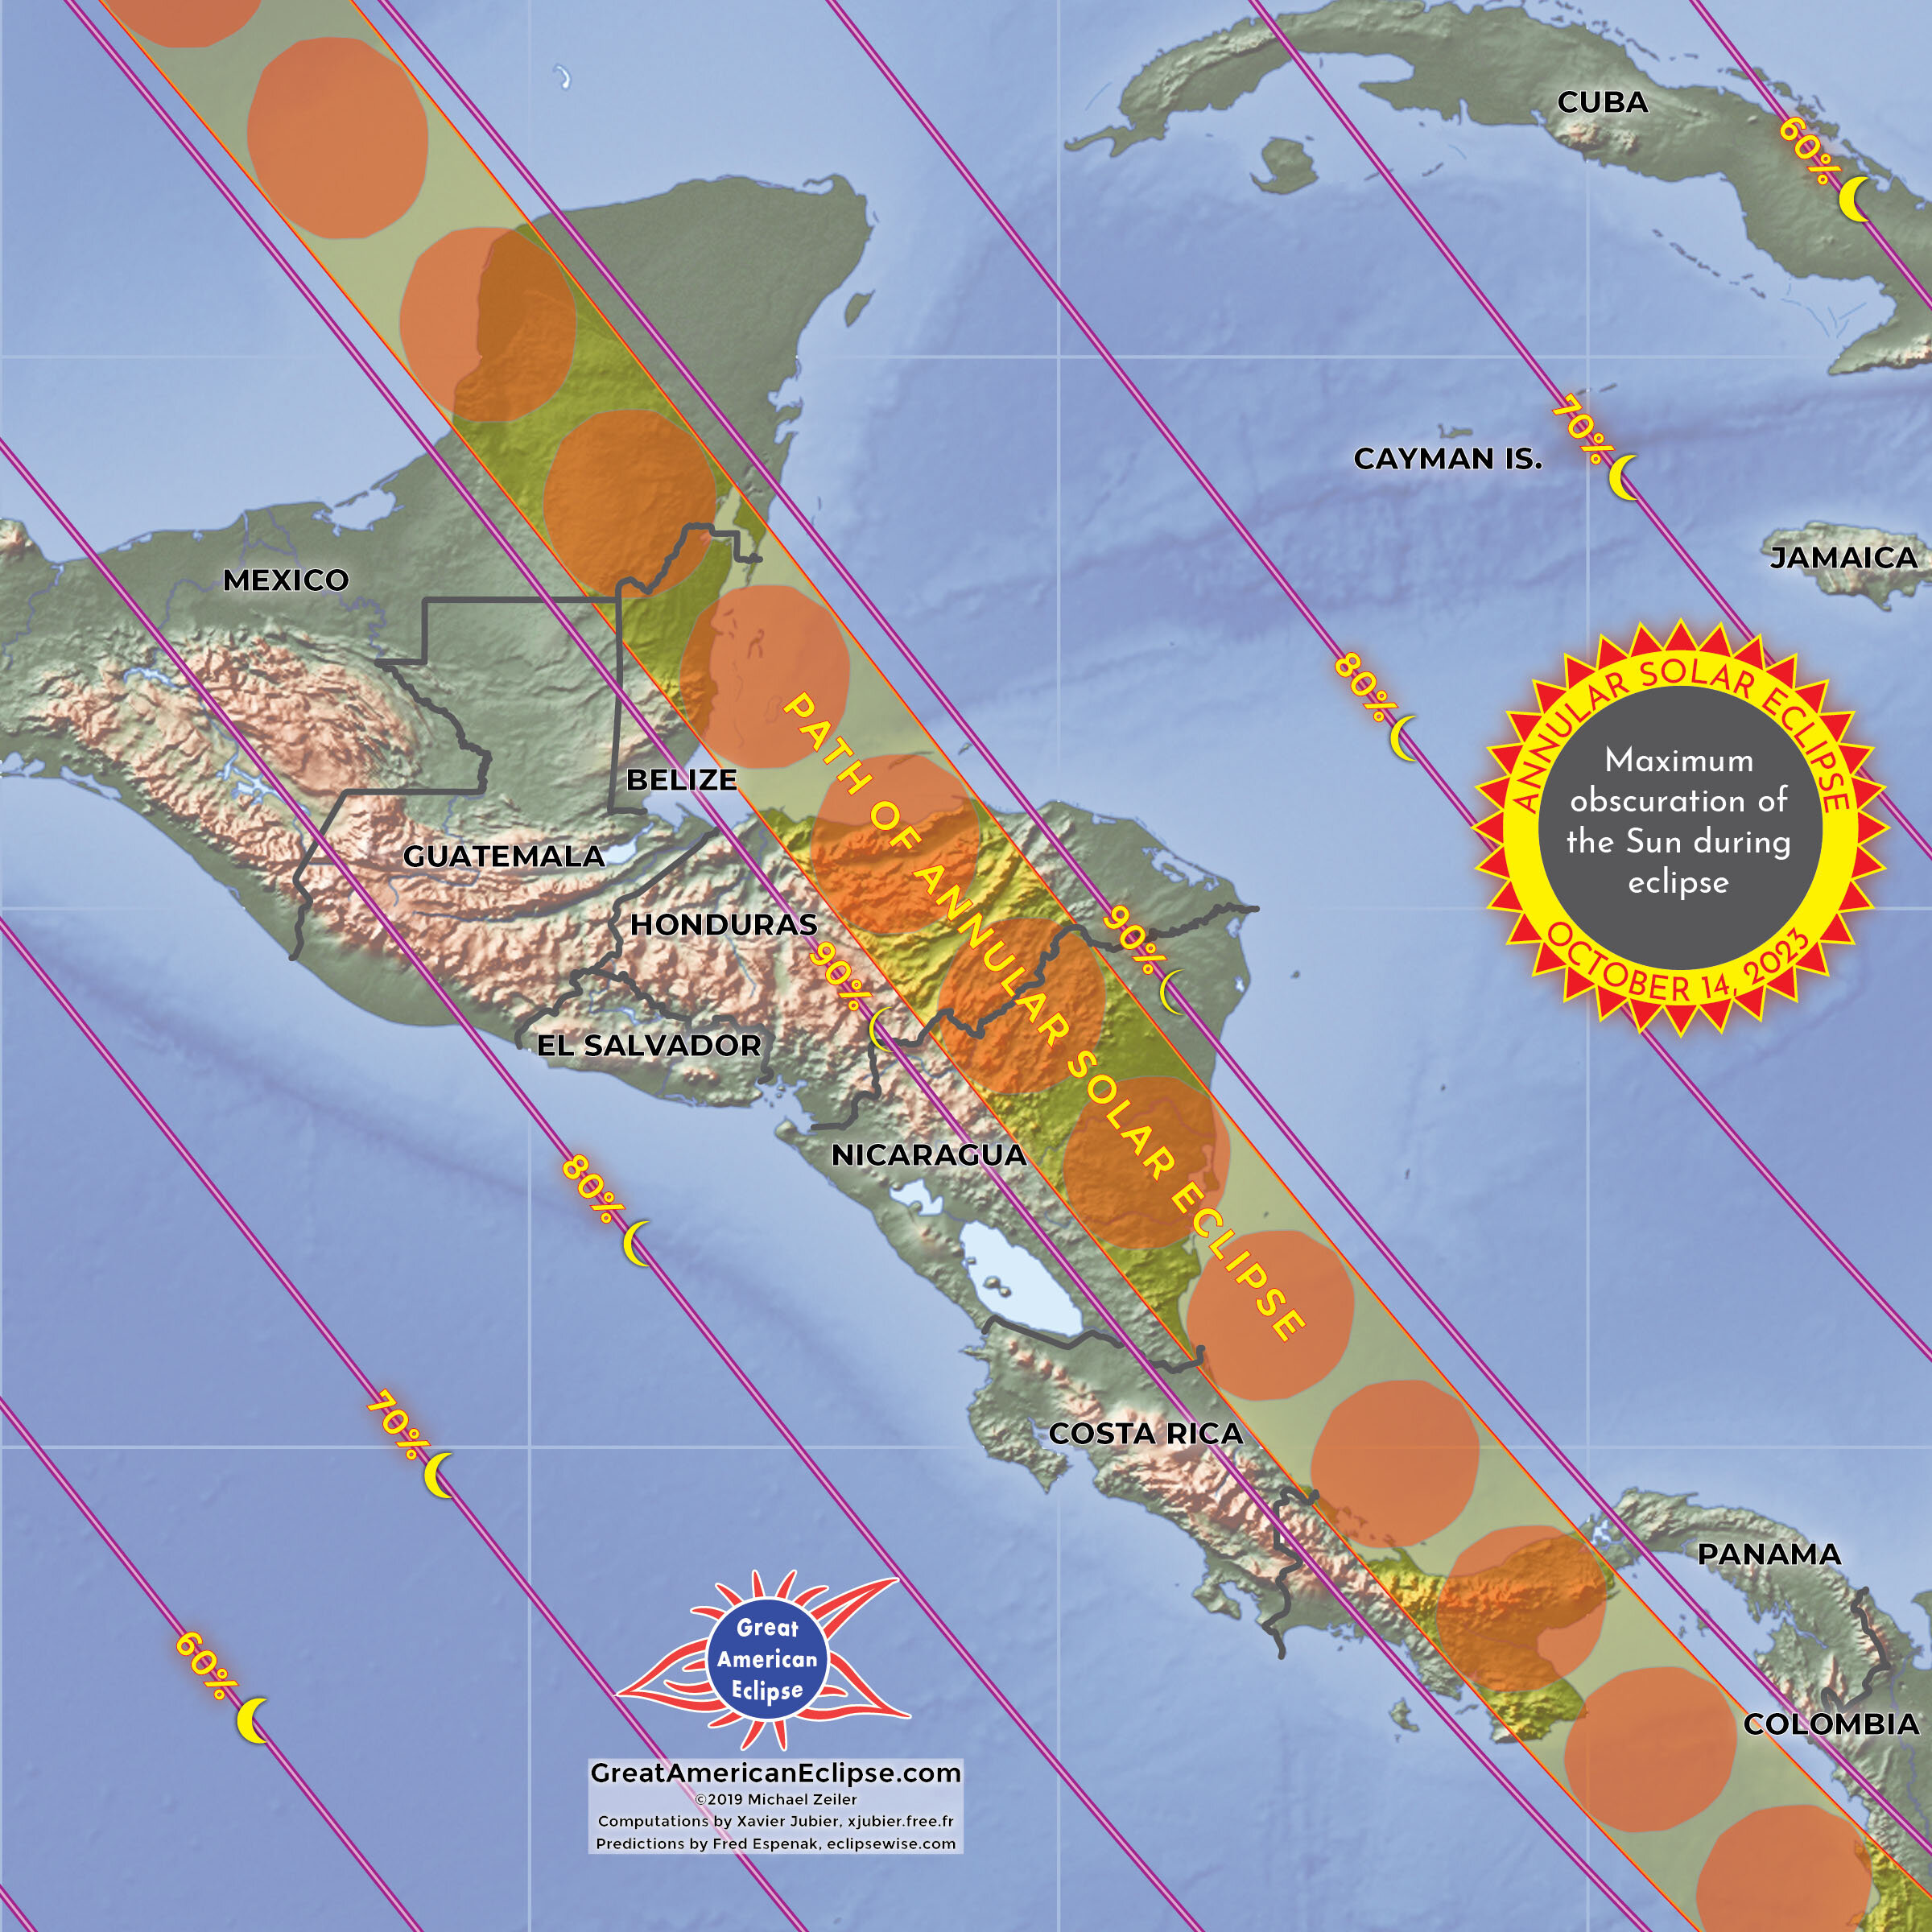 CREDIT: GreatAmericanEclipse.com - The annular solar eclipse across Central America